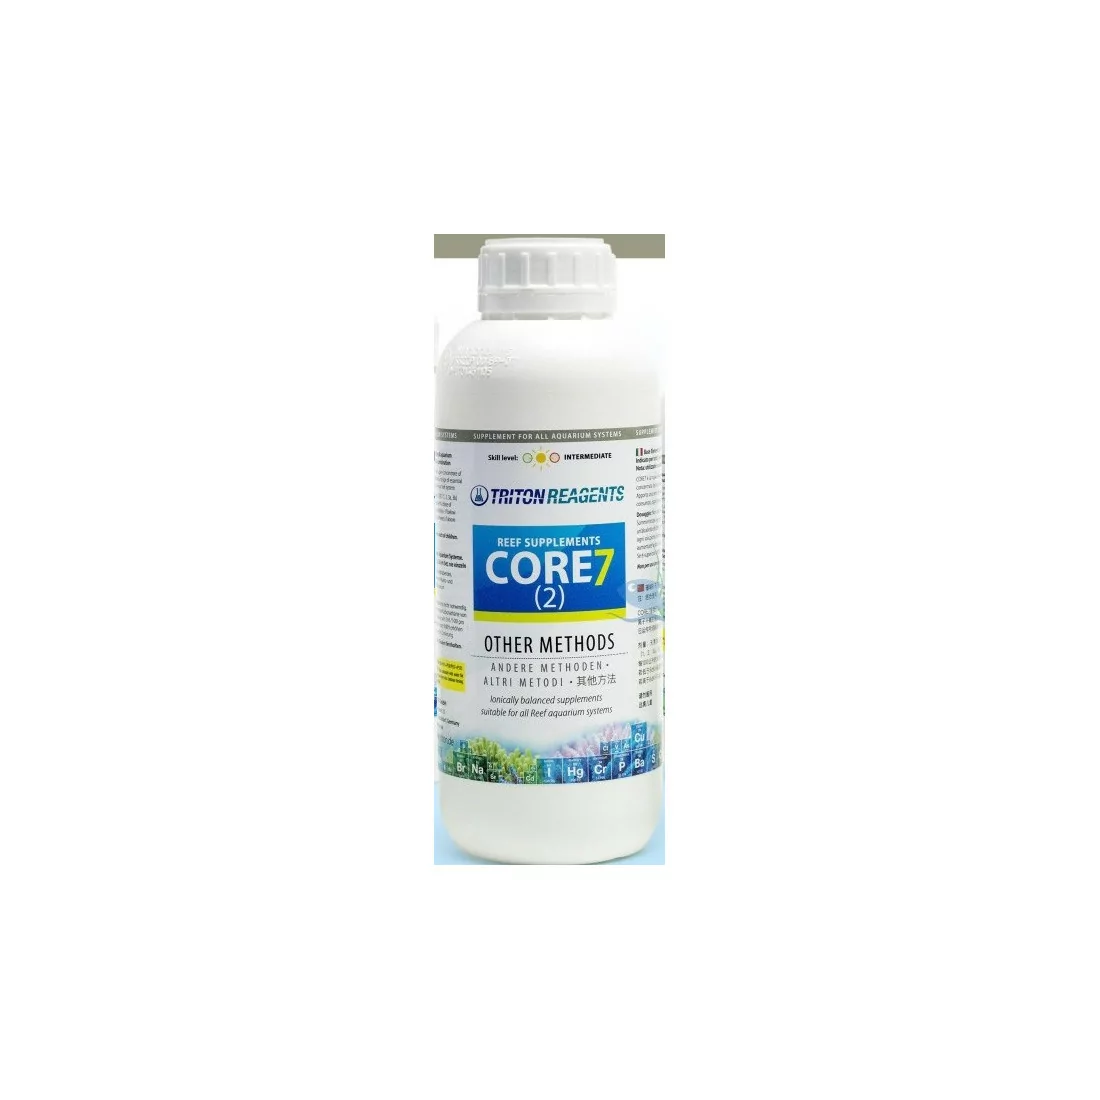 Triton Core7 reef supplements (2) - 10L